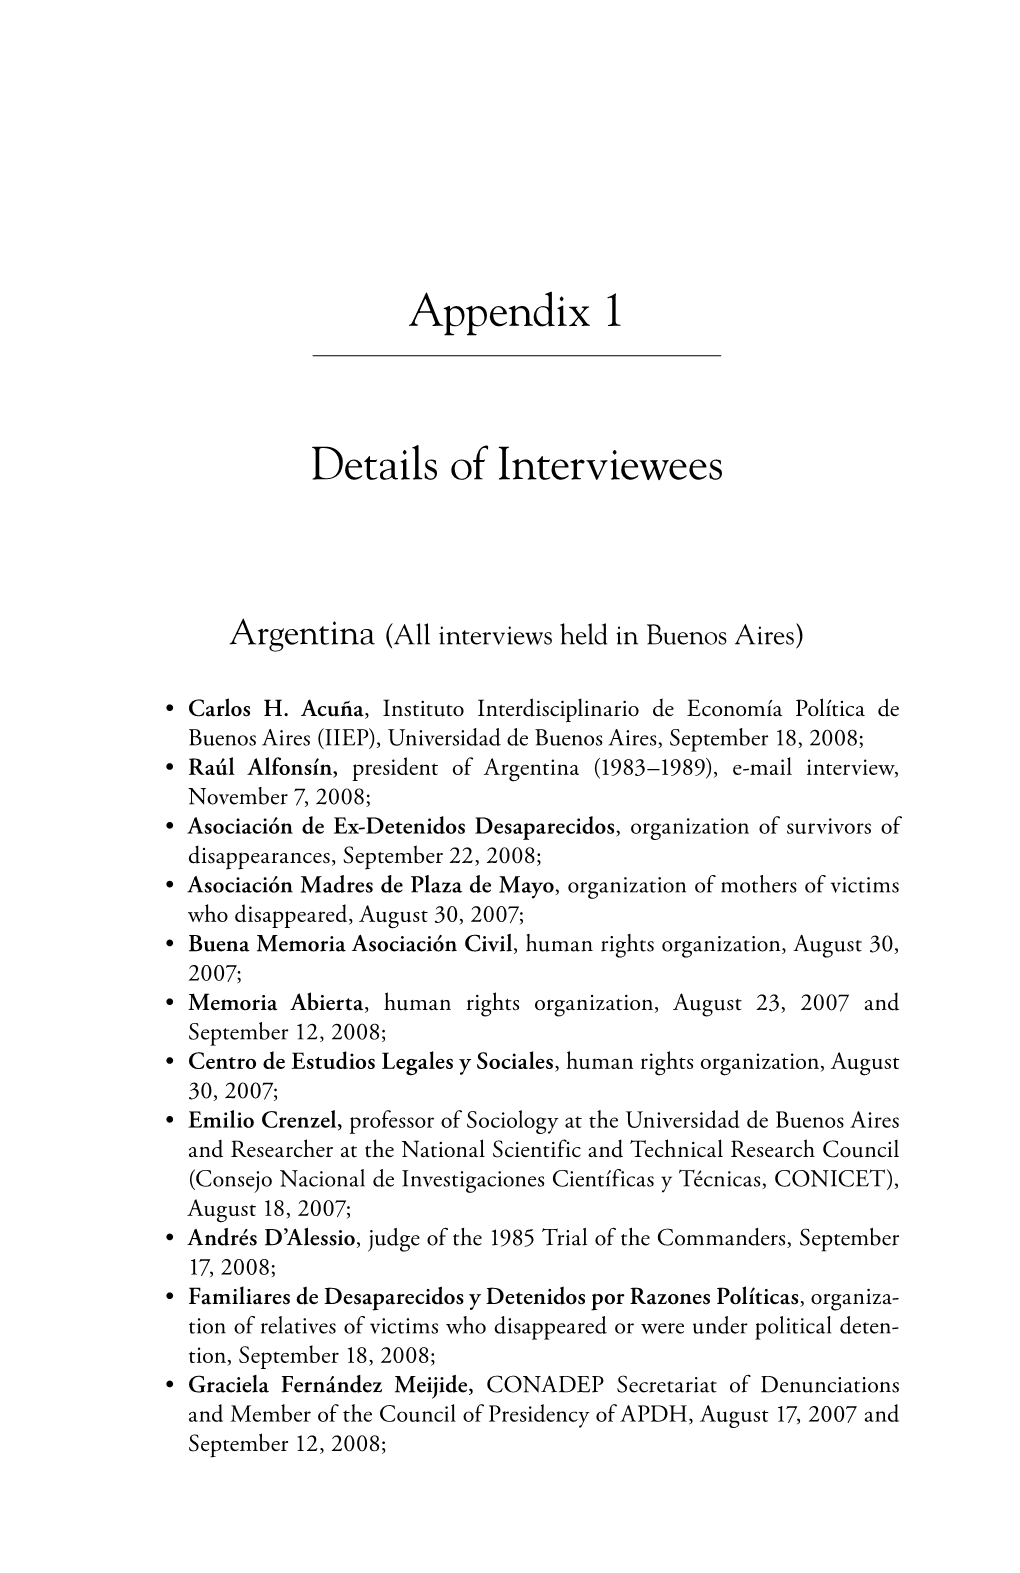 Appendix 1 Details of Interviewees